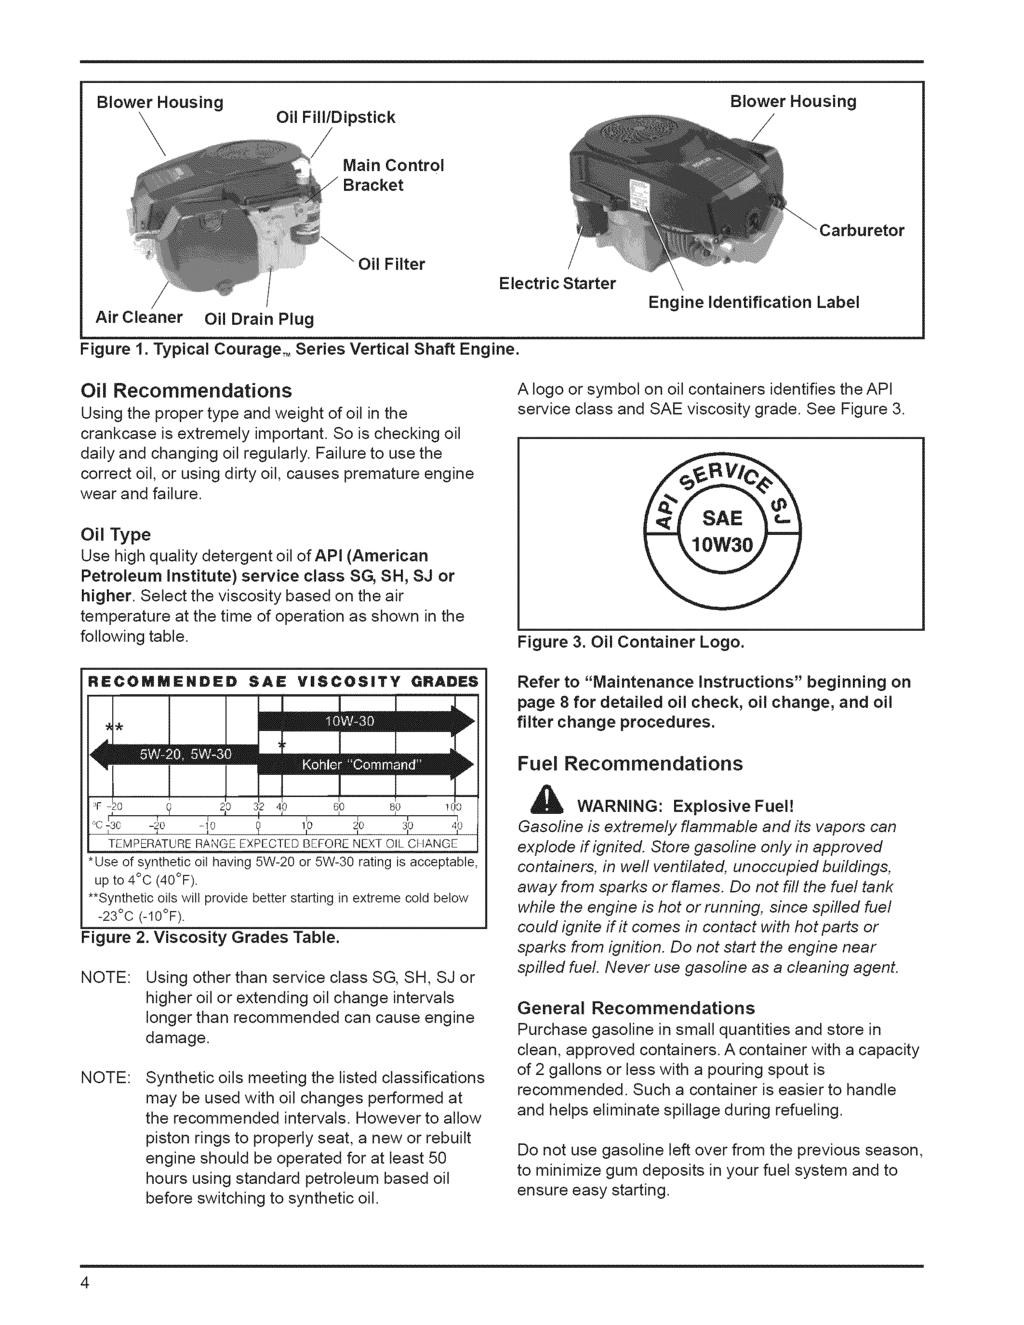 BlowerHousing Oil Fill/Dipstick Main Control Bracket Blower / Housing Air Cleaner Oil Drain Plug Oil Filter Electric Starter Engine identification Label Figure 1.